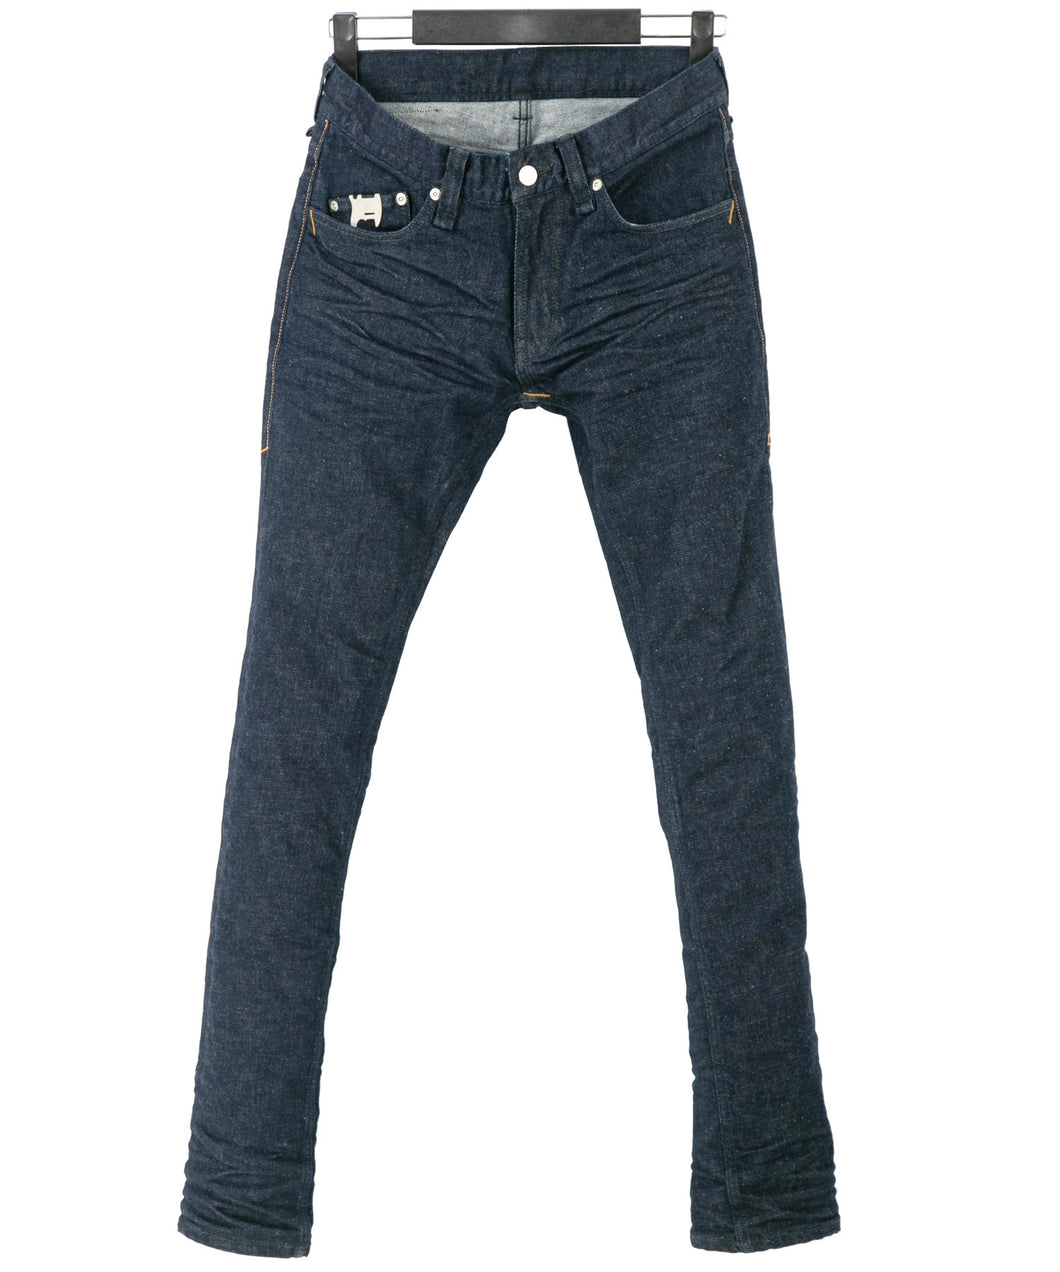 12.5oz Organic Cotton Stretch Denim Skinny Jeans One Wash / INDIGO